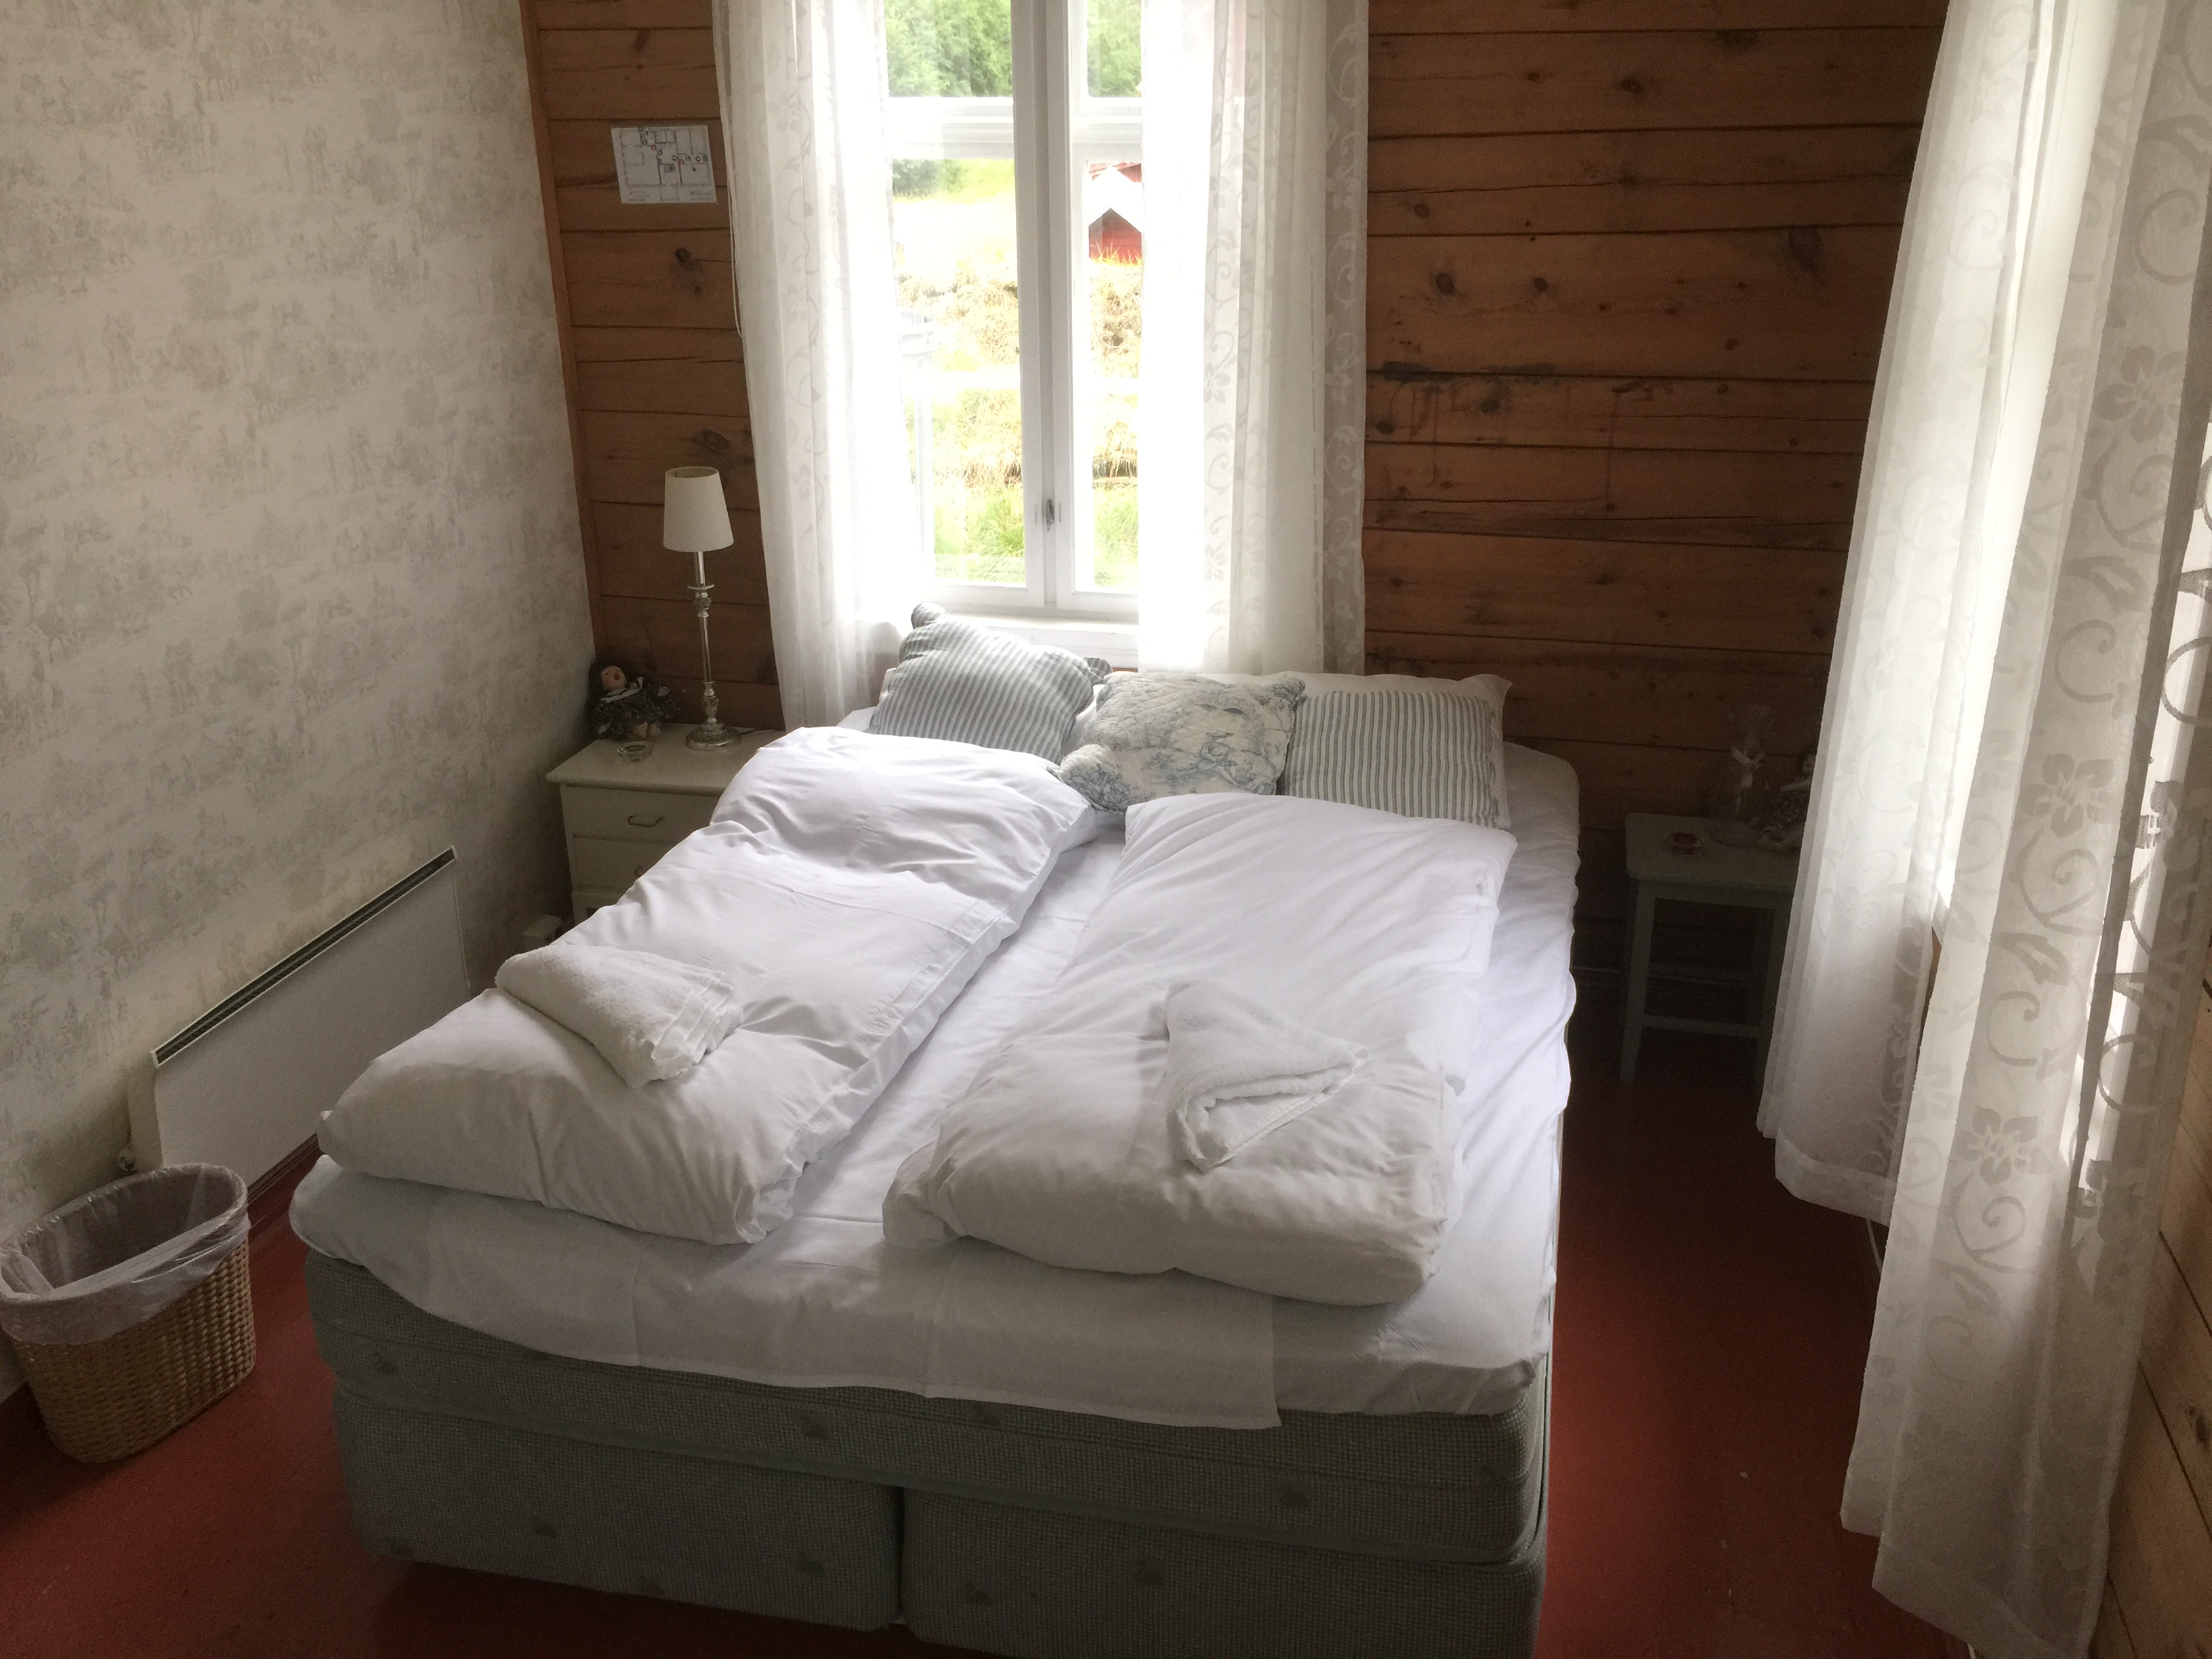 2 bed room